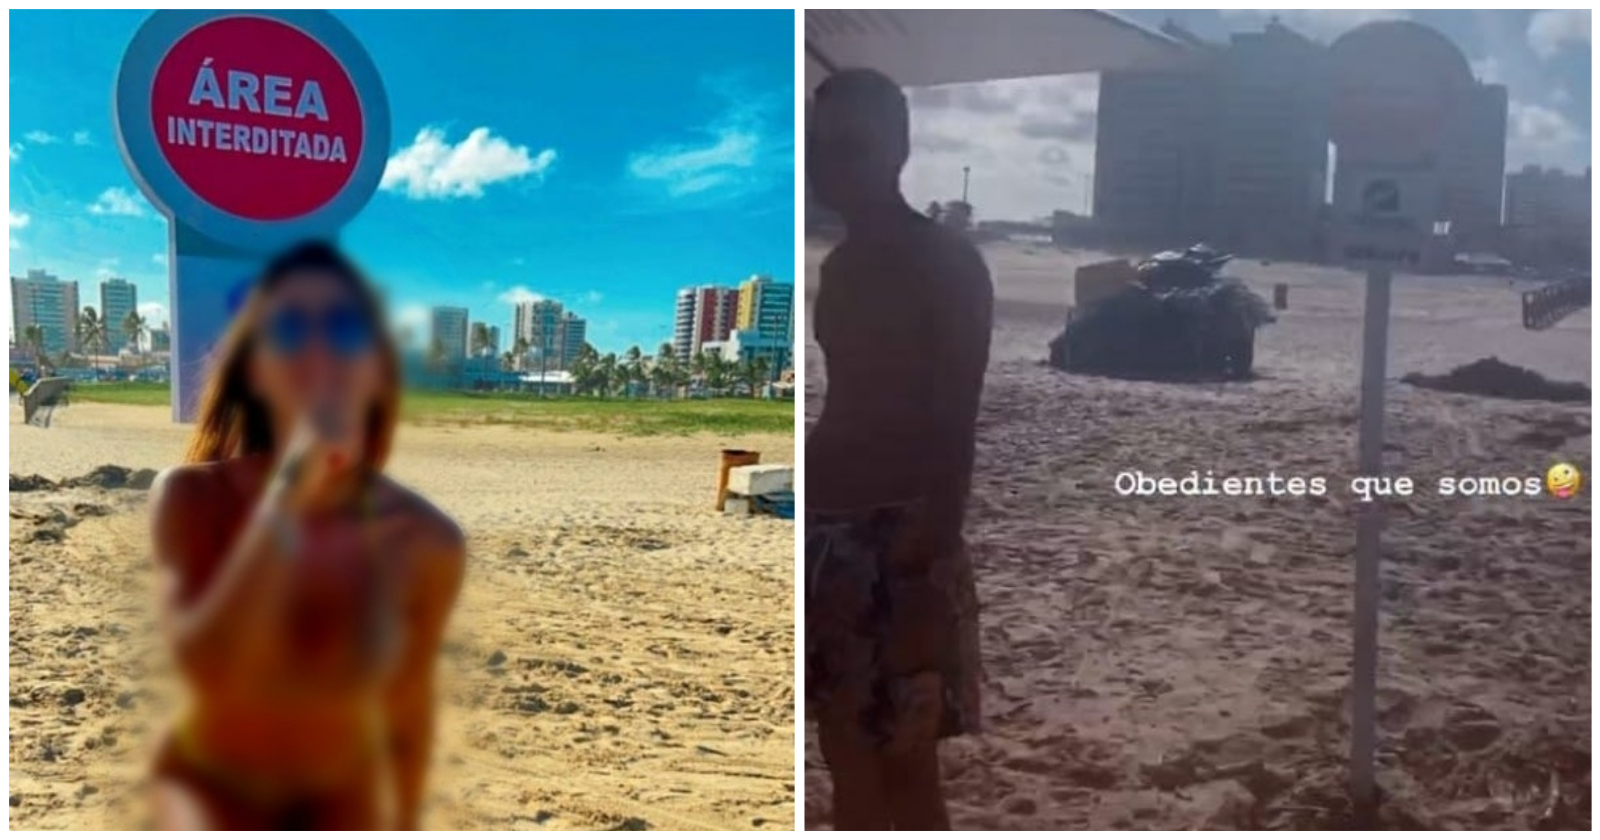 Jovens publicam foto em praia interditada